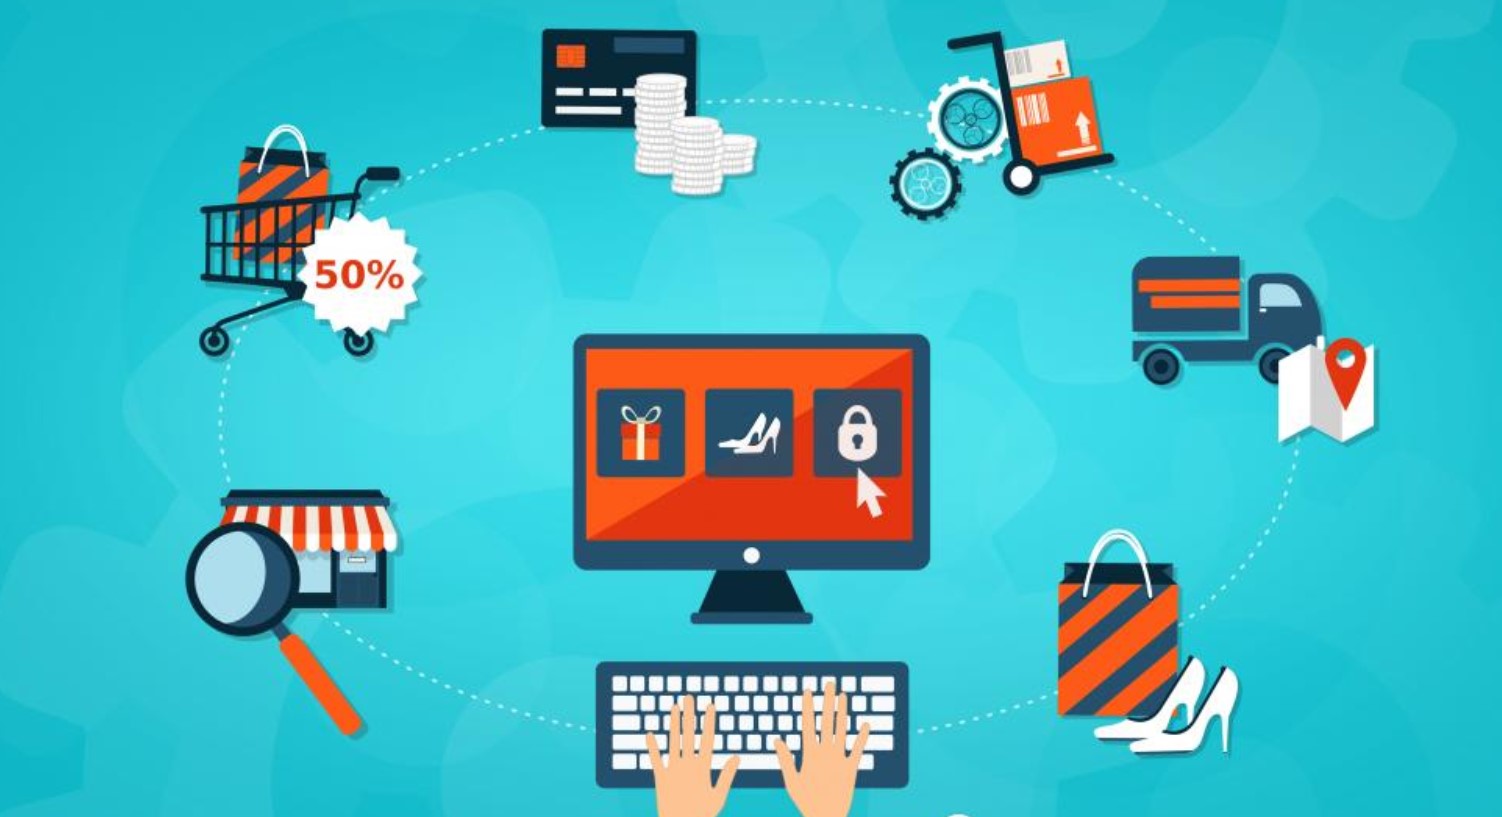 Shoppping Online e-Commerce